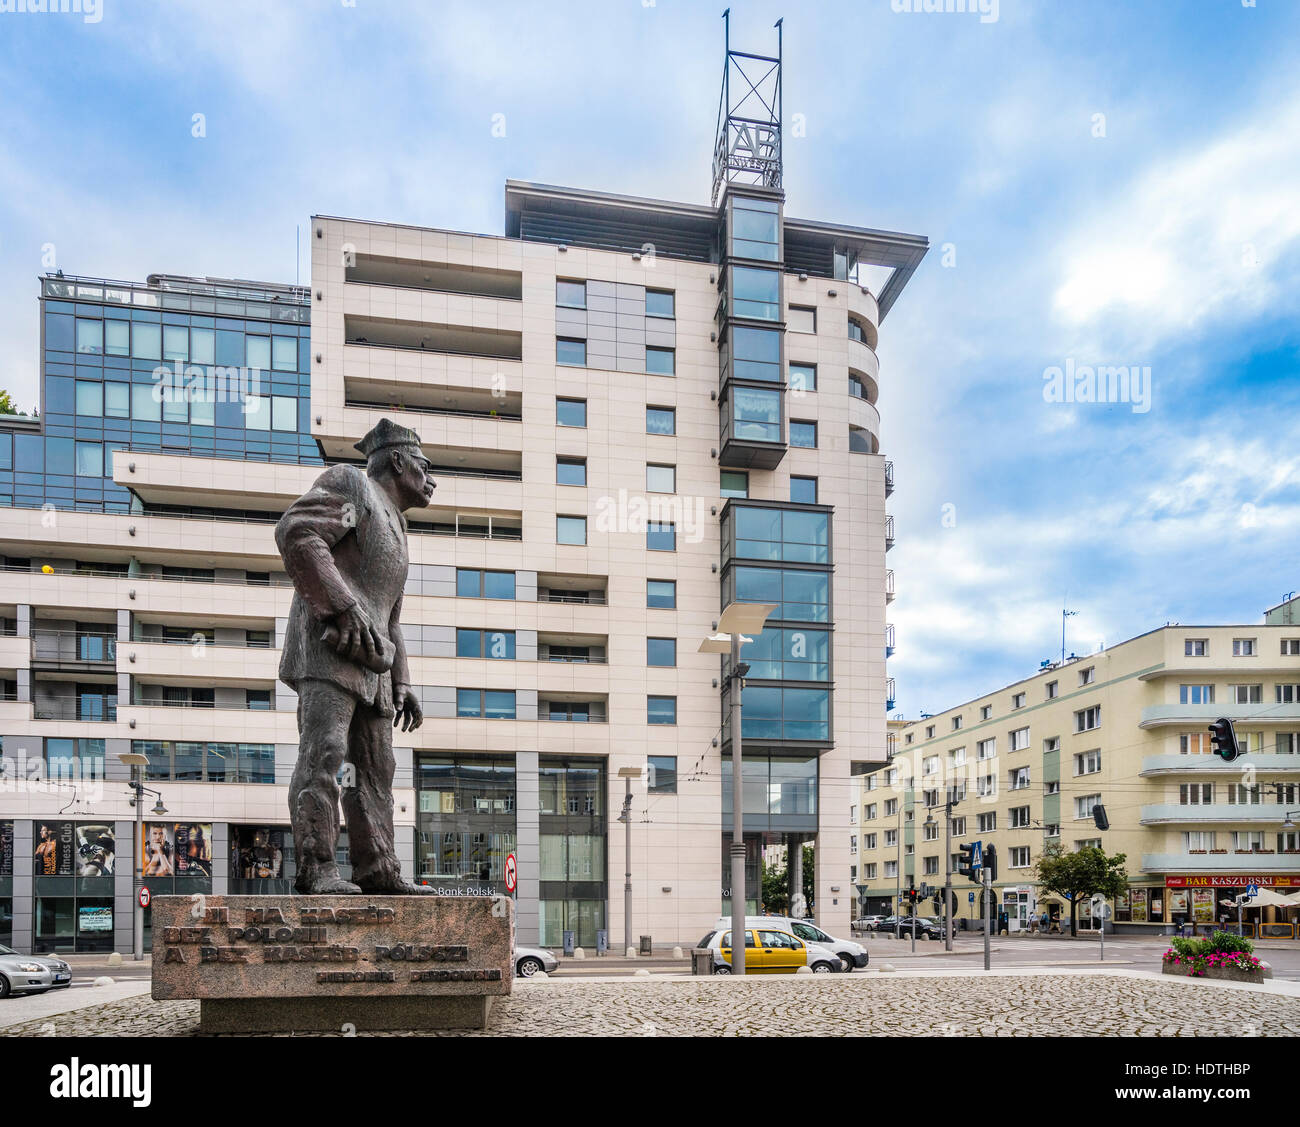 Polonia, Pomerania, Gdynia, monumento a la activista Kashubian Anthony Abraham y el moderno edificio de apartamentos Transatlantik en Plaza Kaszubski Foto de stock